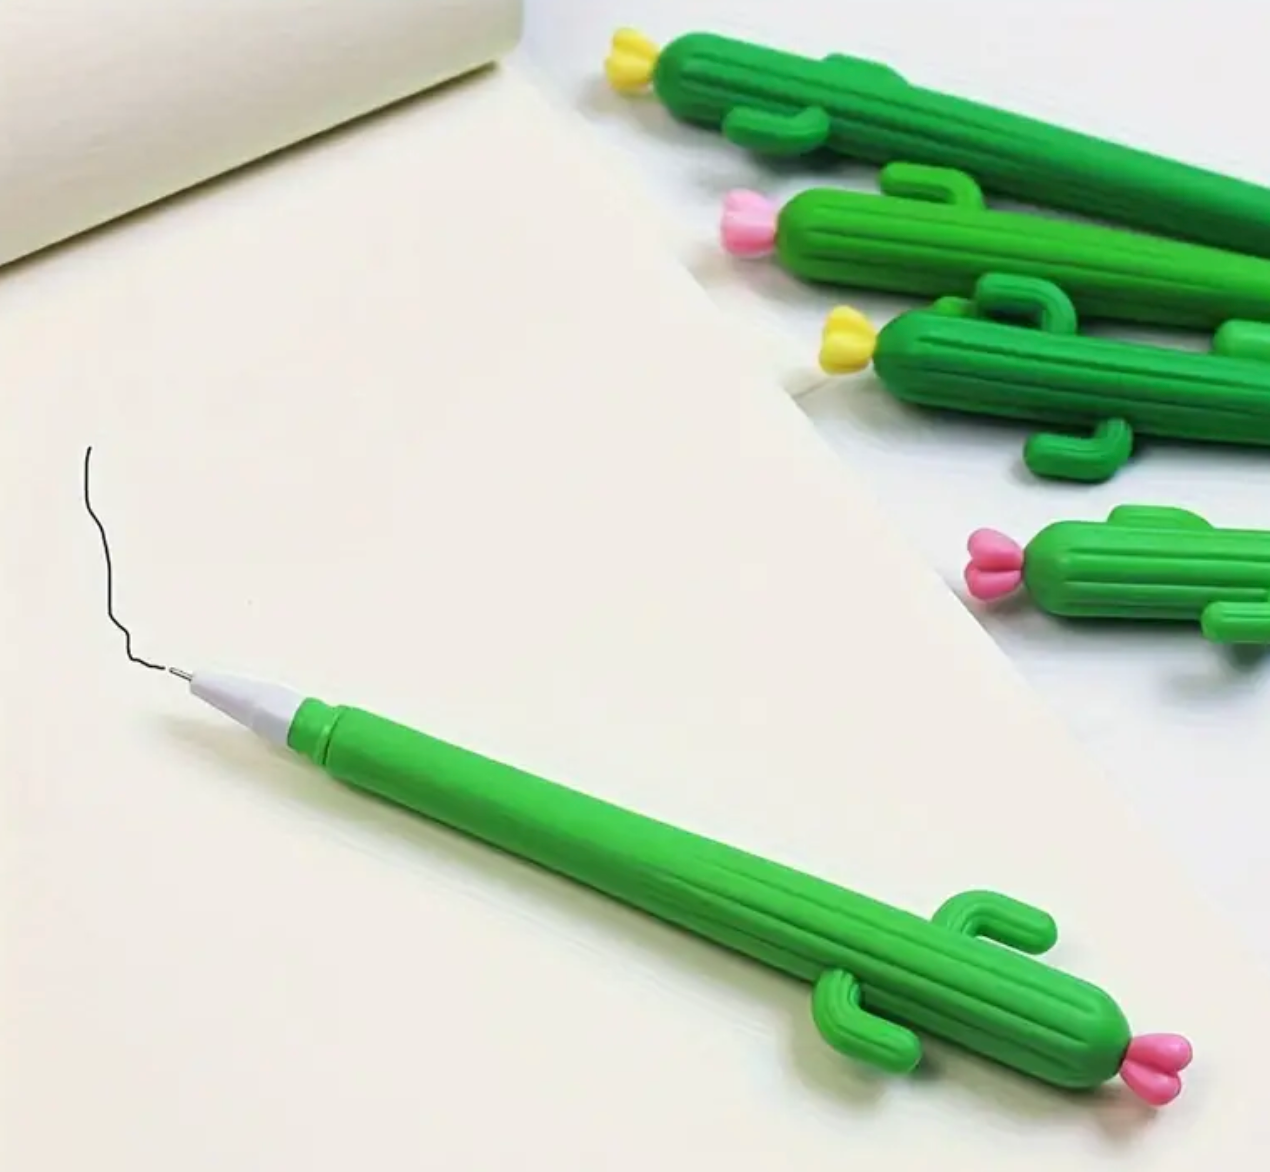 Cactus gel pens